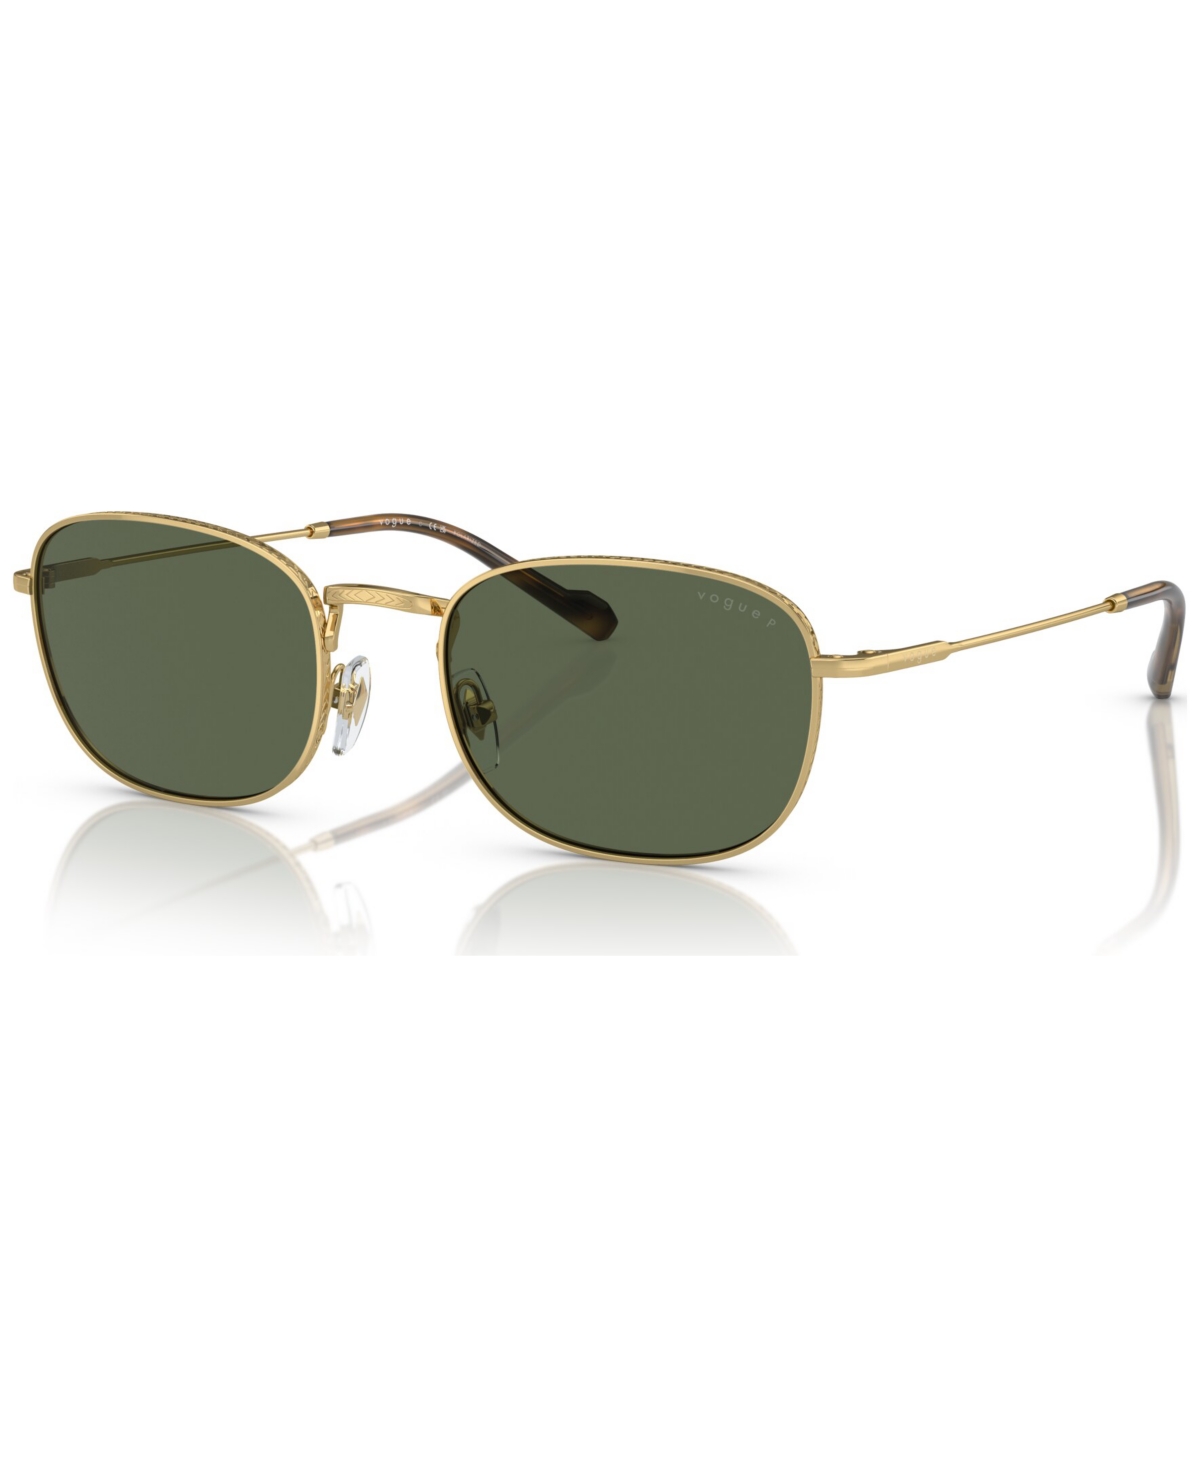 Men's Polarized Sunglasses, VO4276S - Gold-Tone